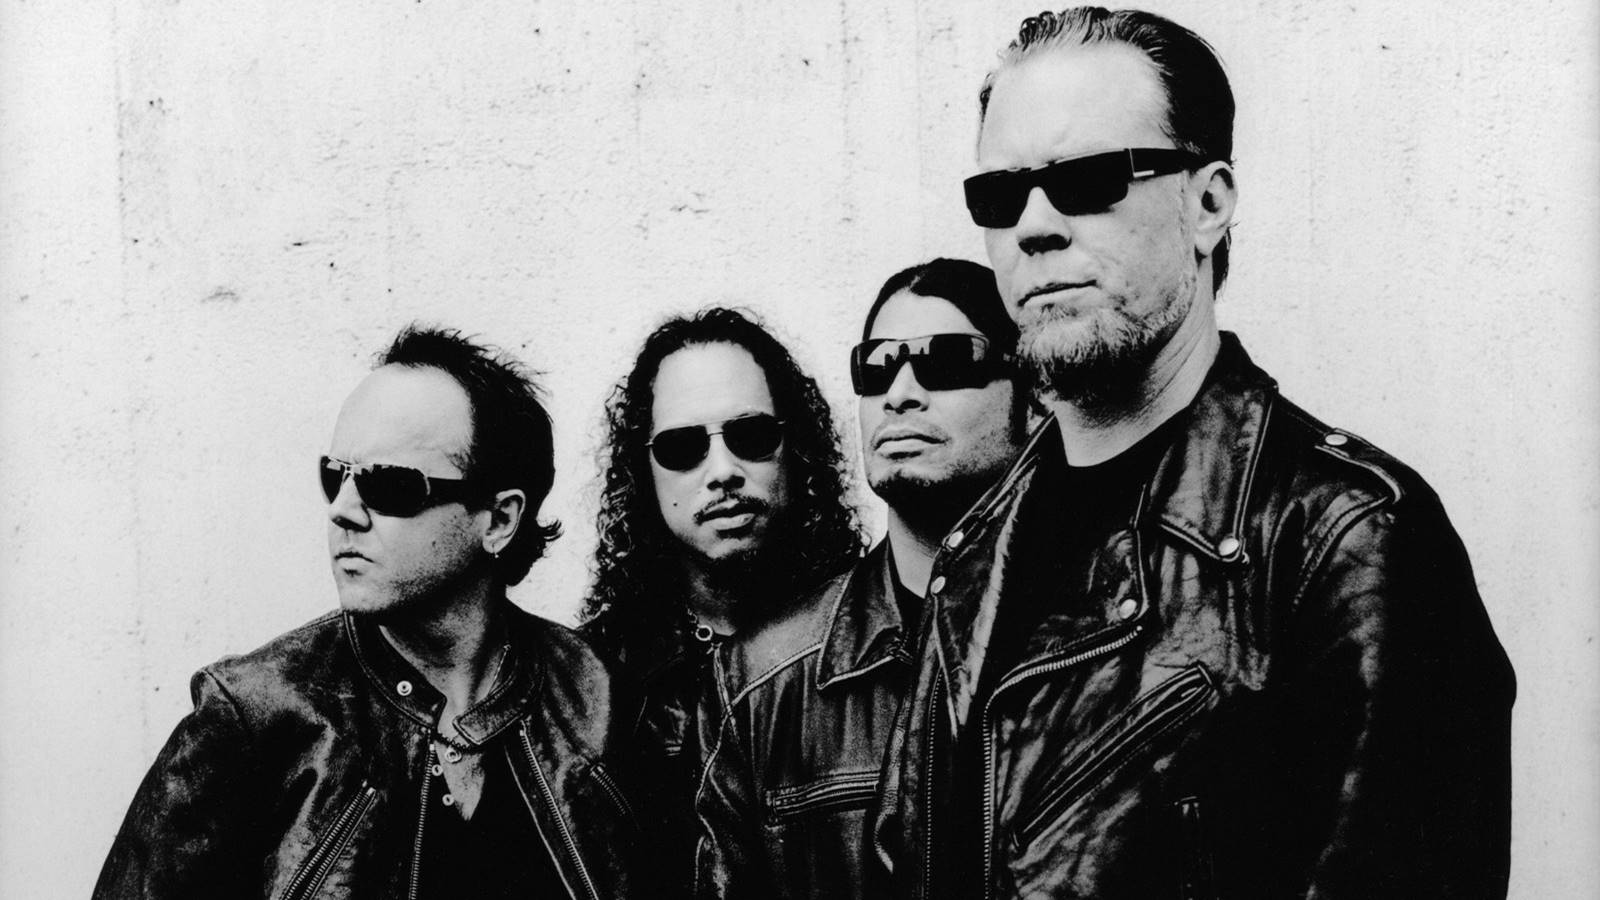 Wallpaper of Heavy Metal Band Metallica